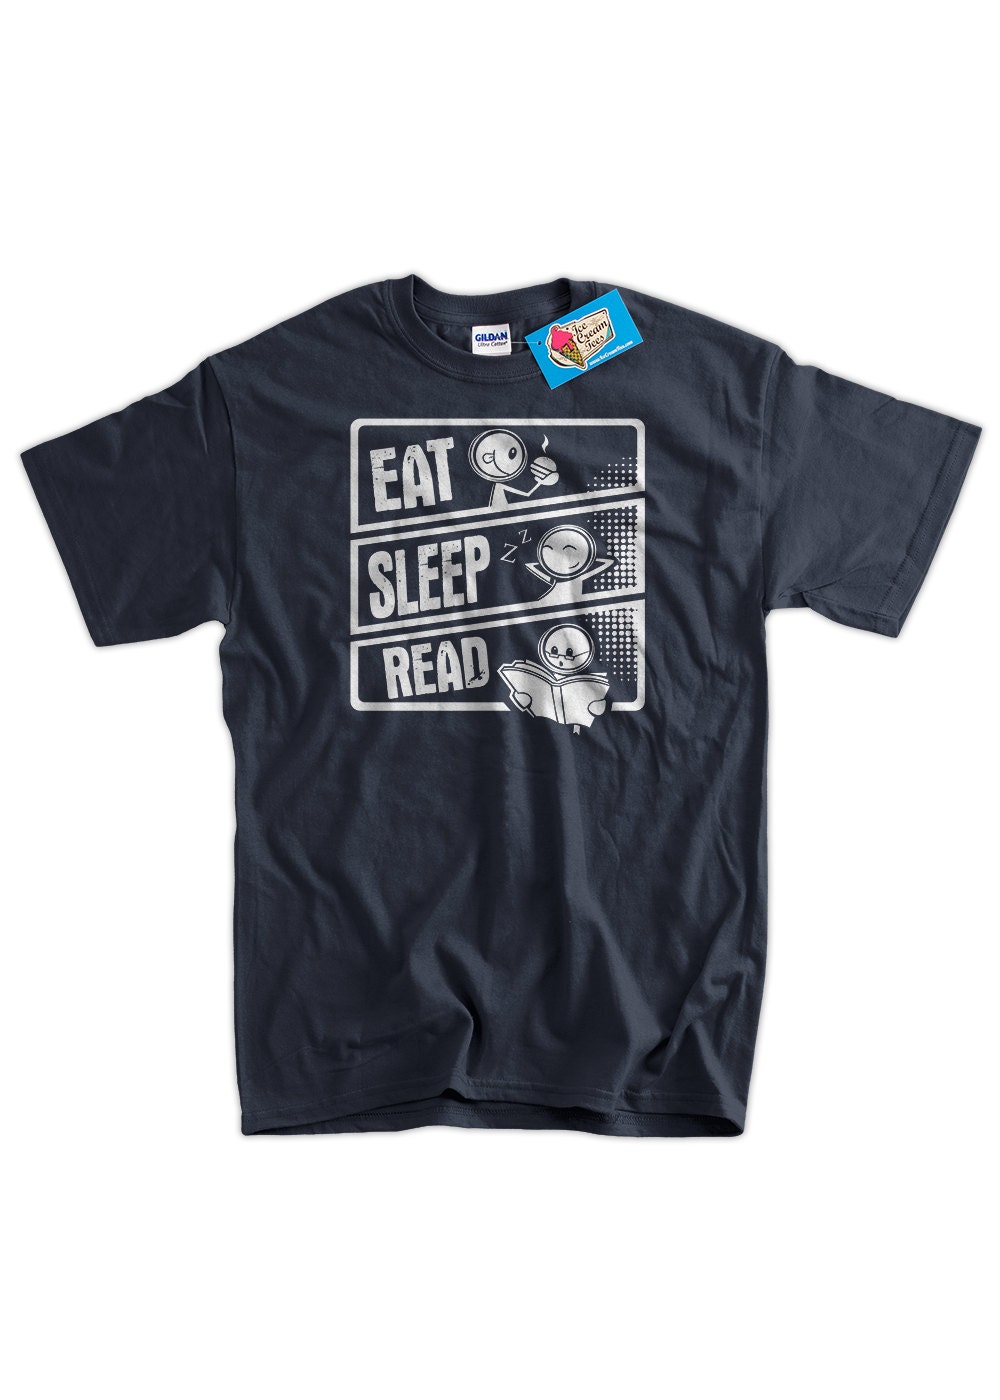 Eat Sleep Read T-shirt Reading Books Literacy School T-shirt - Etsy